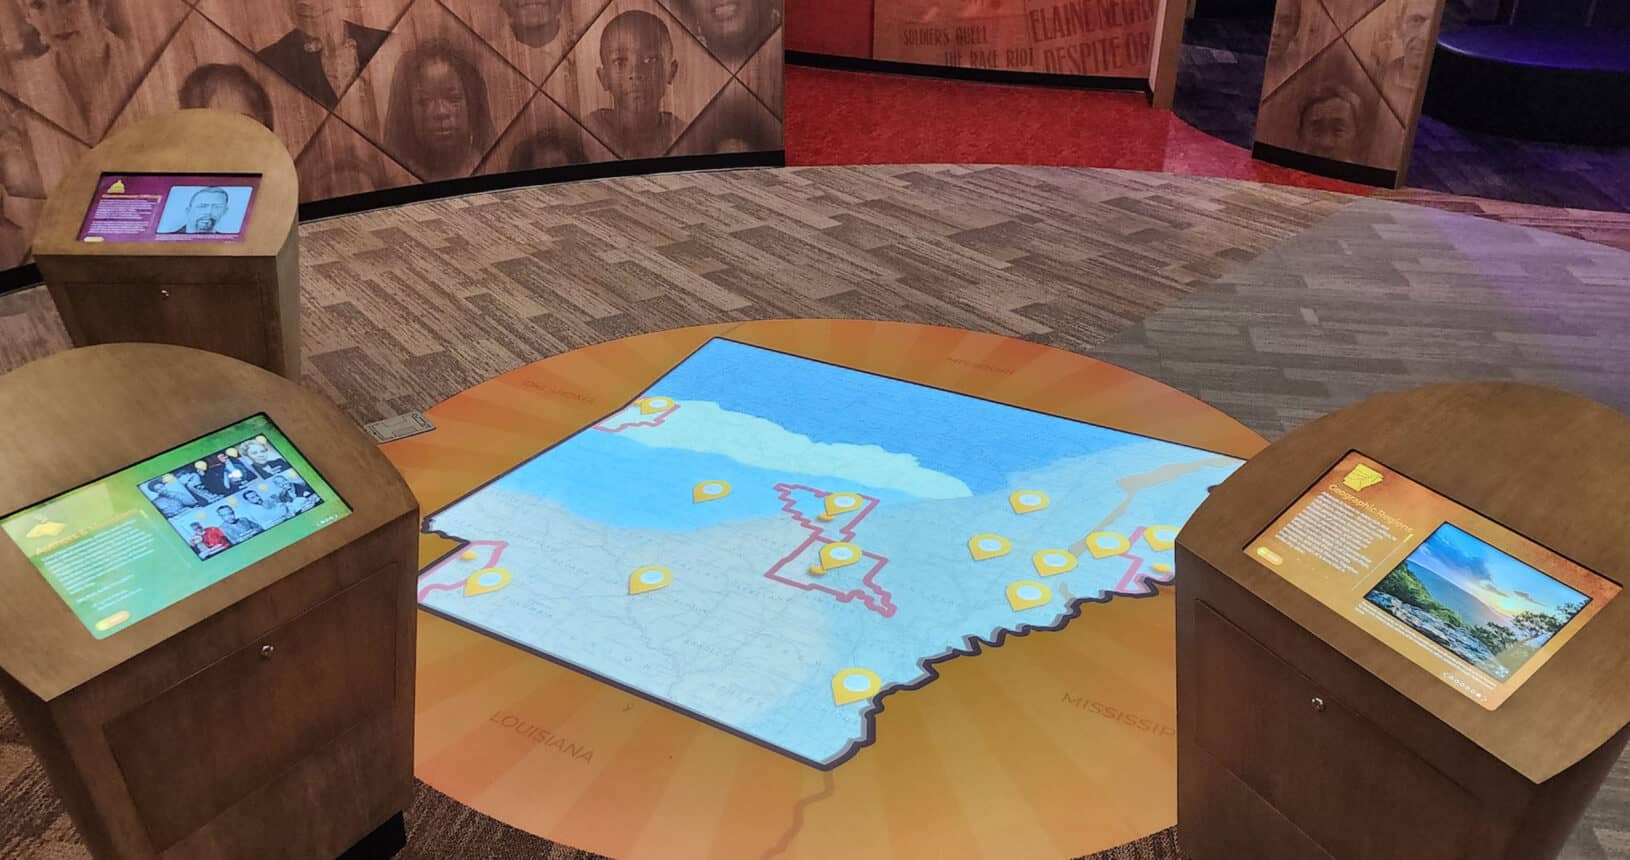 3 touchscreens around floor projected map